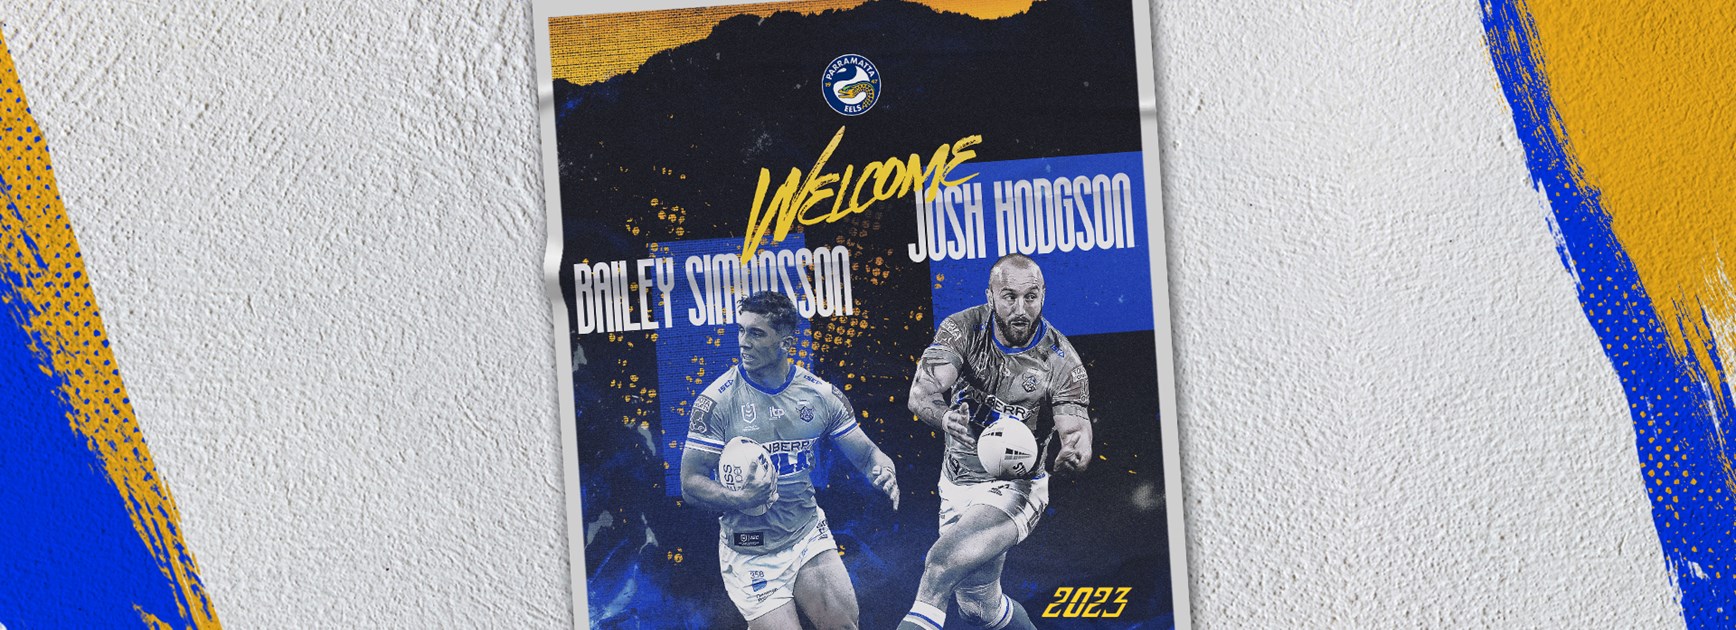 Bailey Simonsson & Josh Hodgson join the Eels